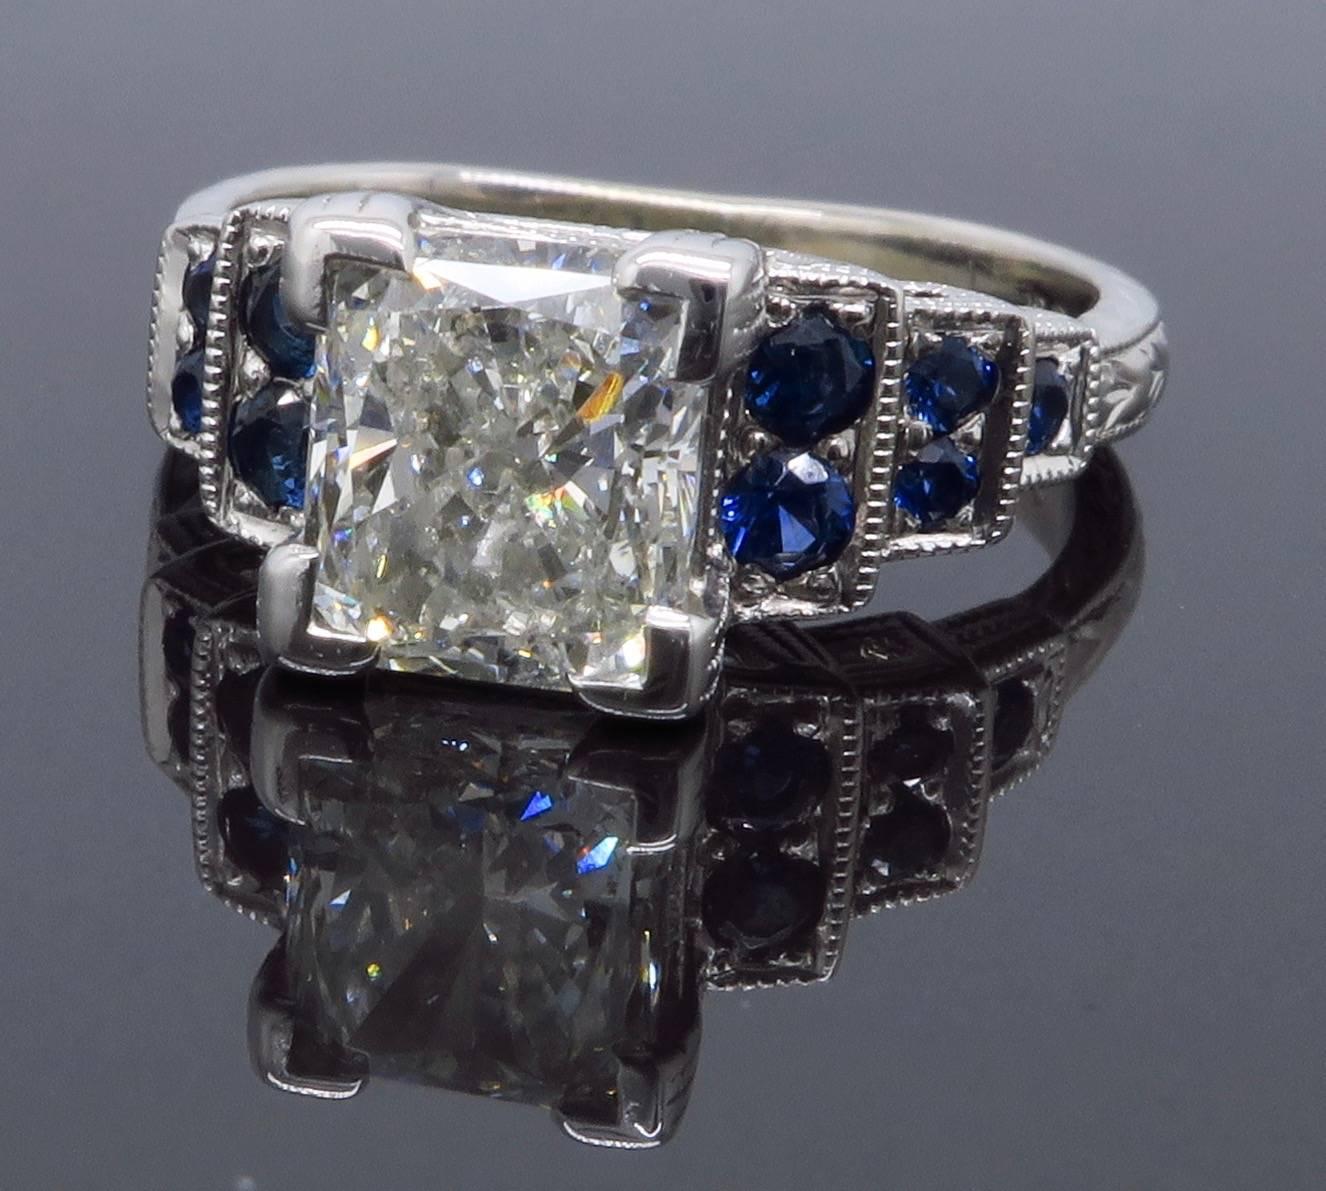 Women's 1.40 Carat Princess Cut Diamond and Sapphire Ring